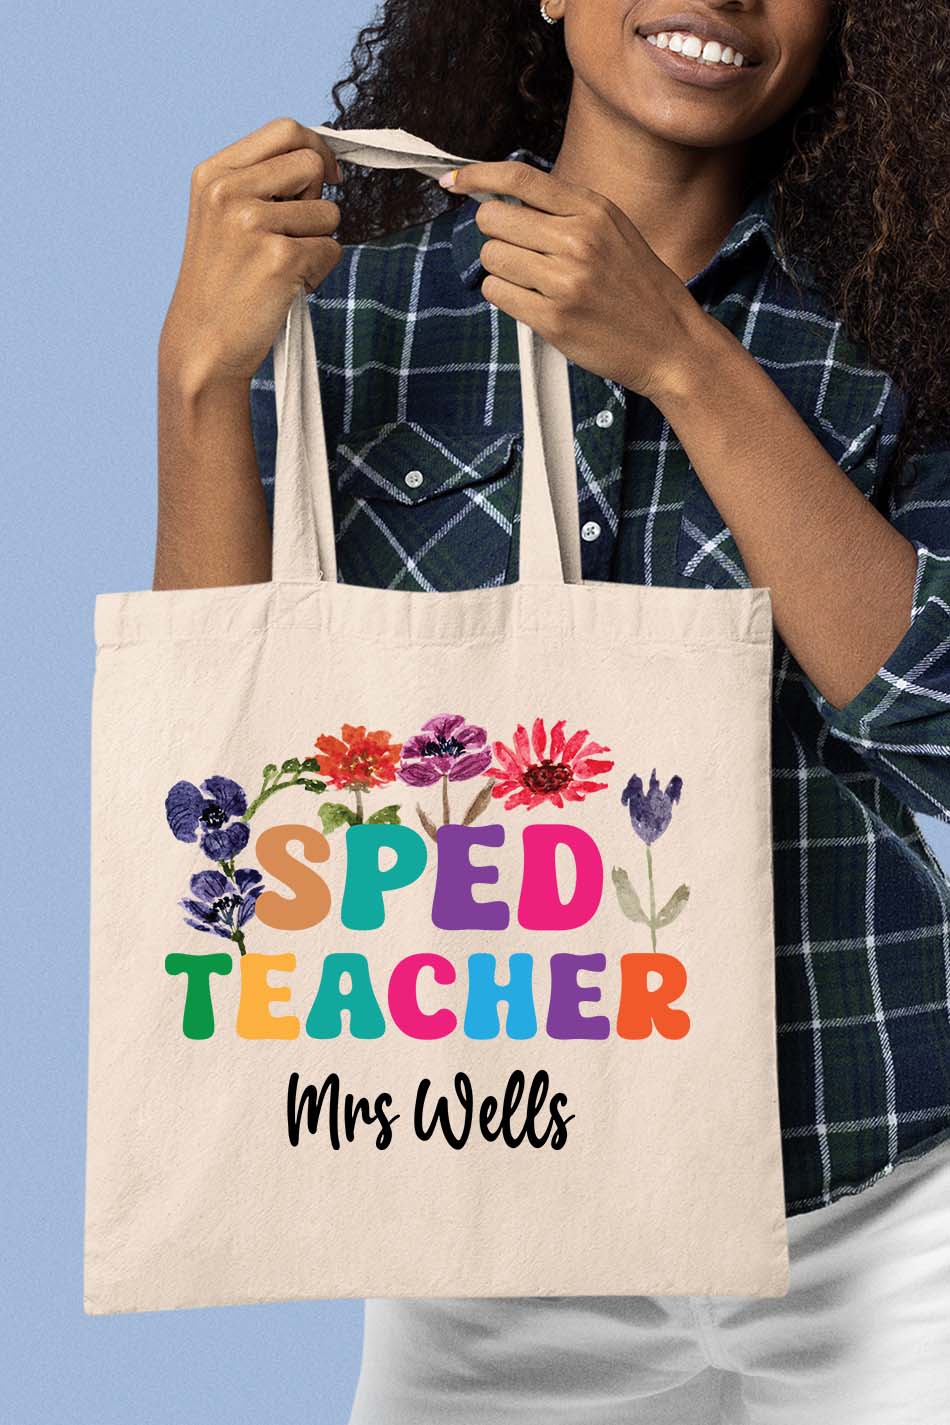 Sped Teacher Tote Bag Custom